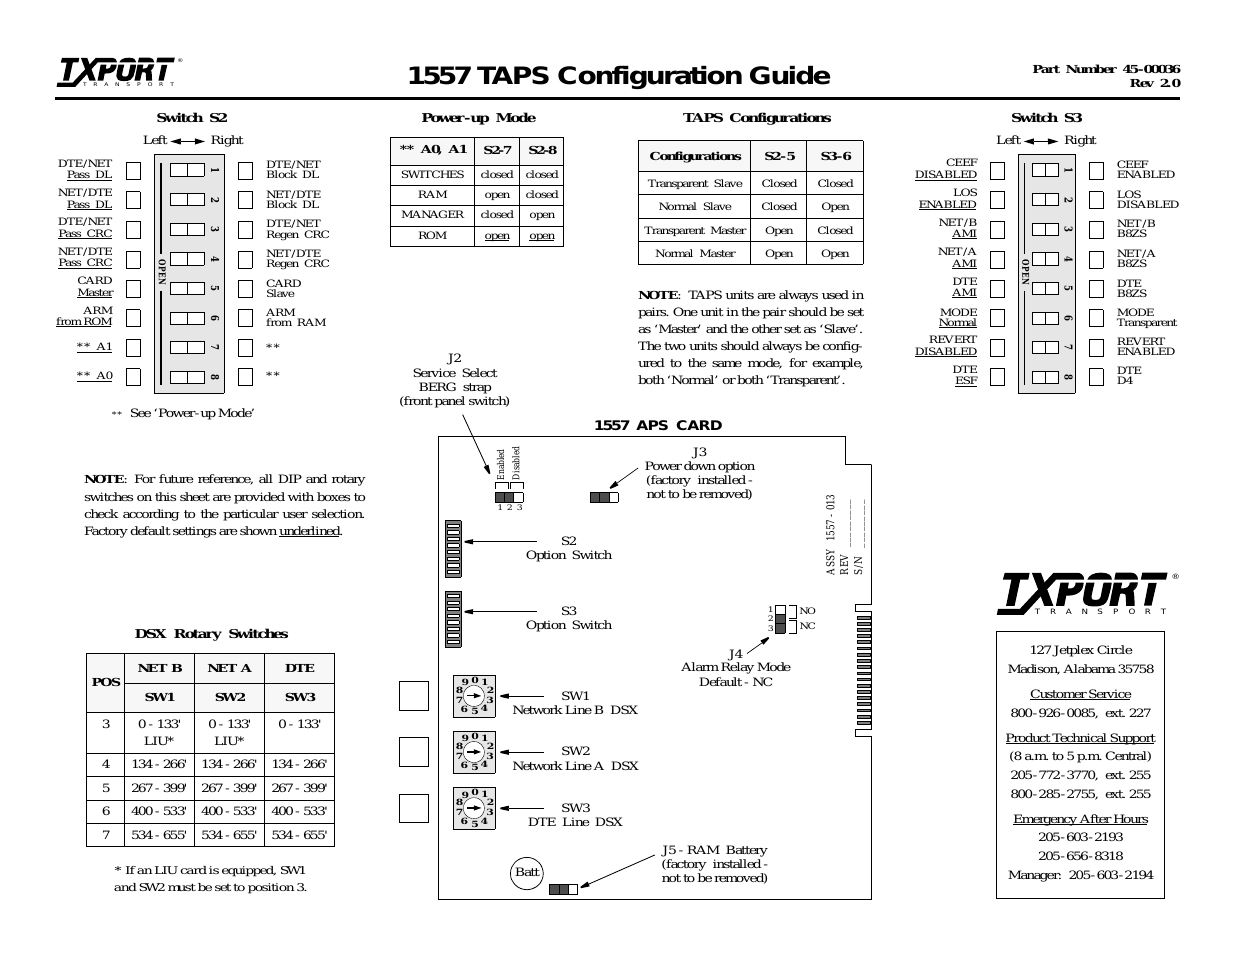 1557 (CG) Configuration/Installation Guide